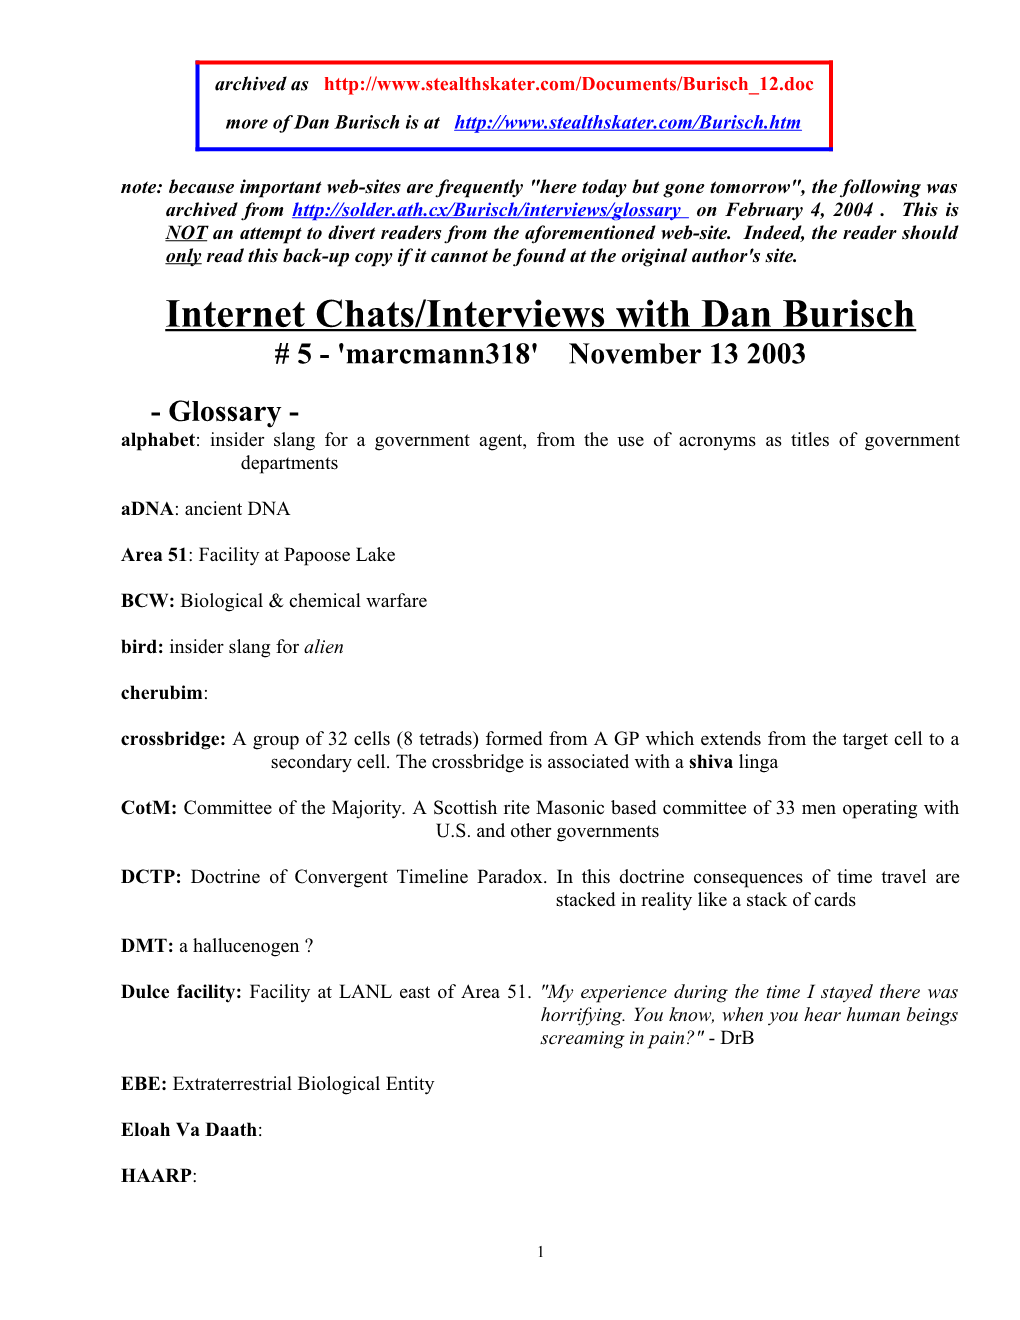 Internet Chats/Interviews with Dan Burisch